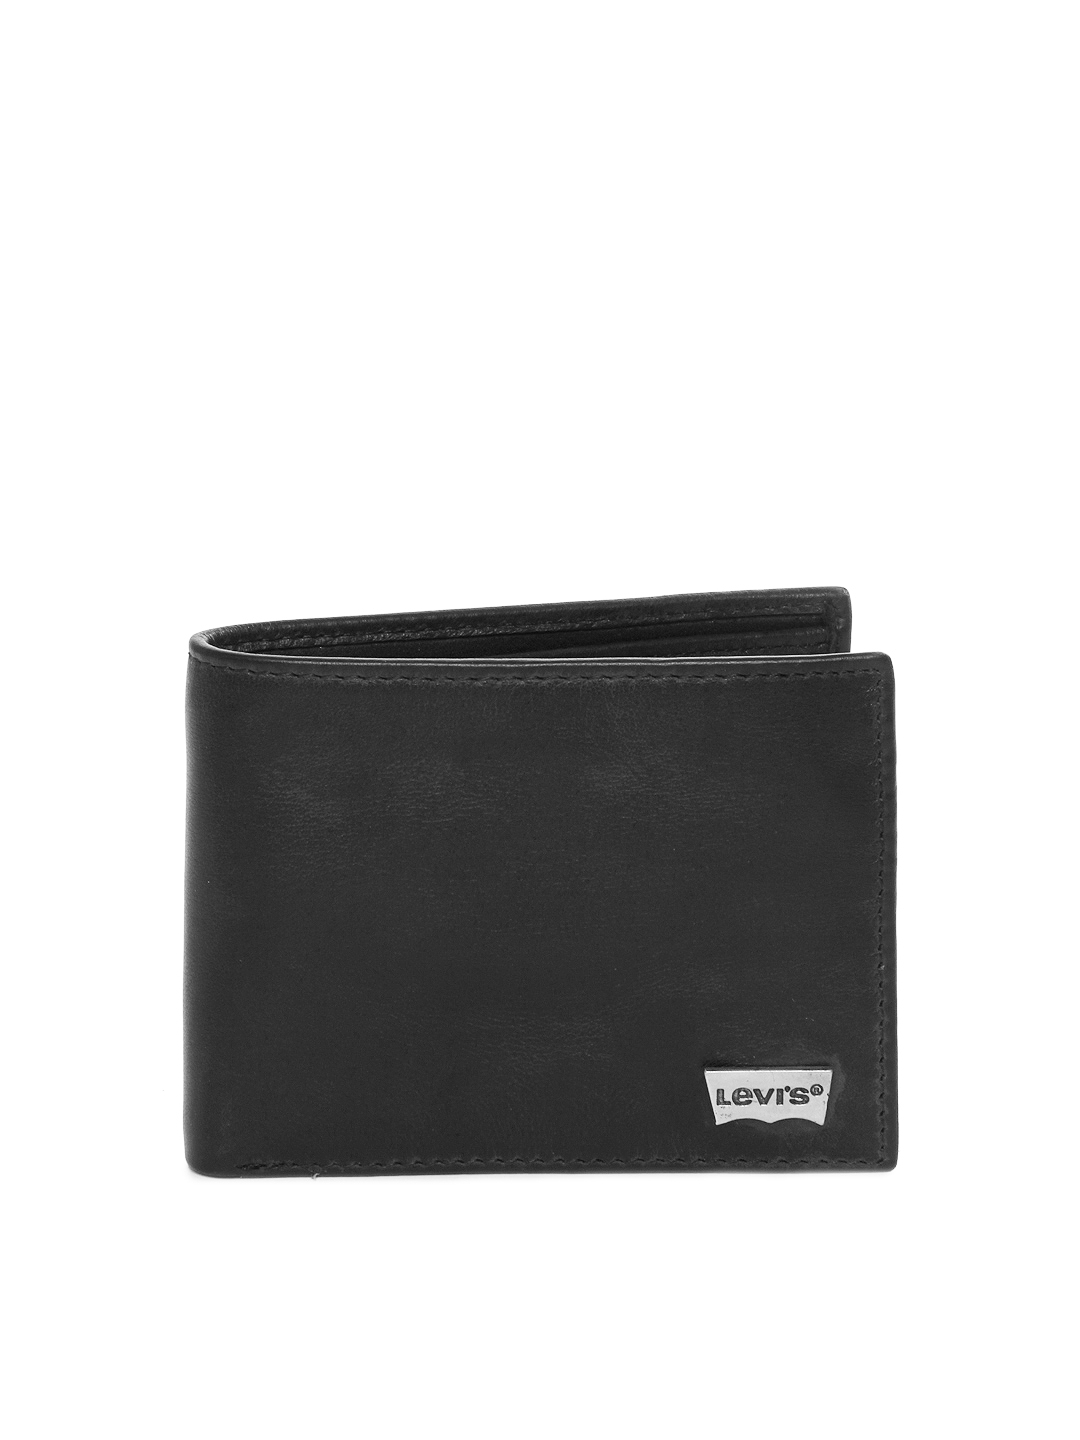 Buy Levis Men Black Leather Wallet - Wallets for Men 239340 | Myntra